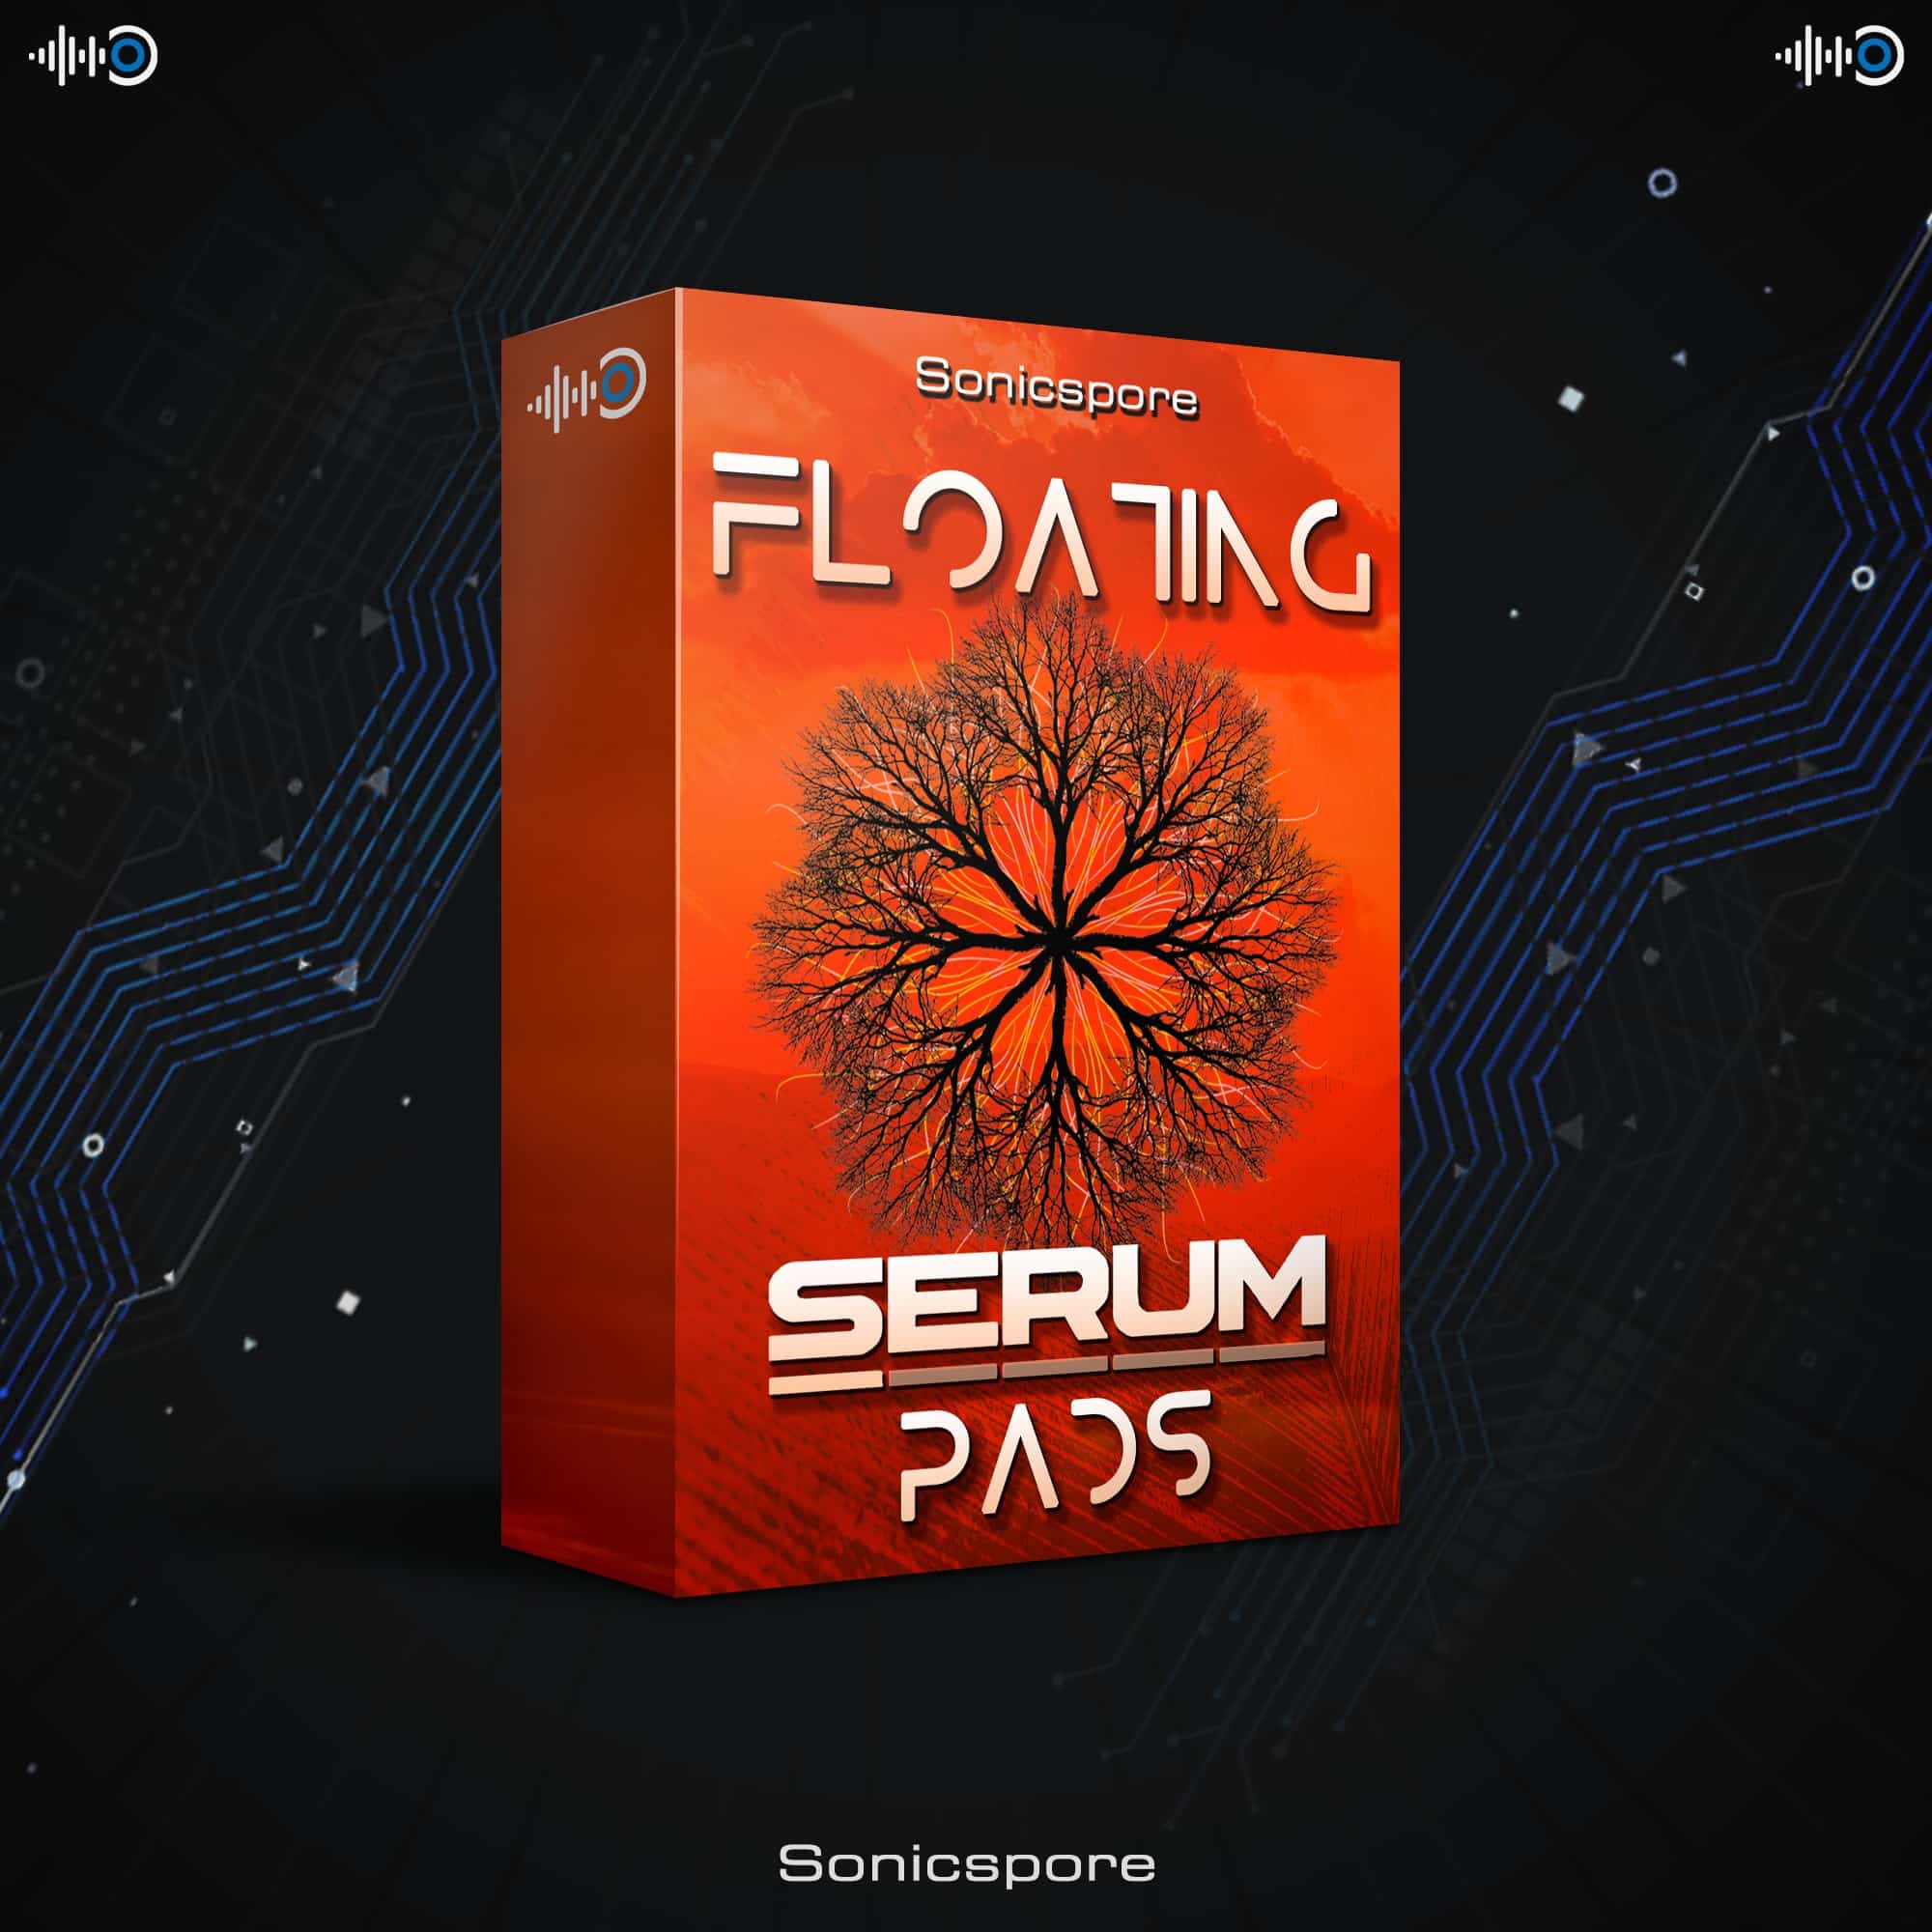 Sonicspore - Floating - Serum Pads